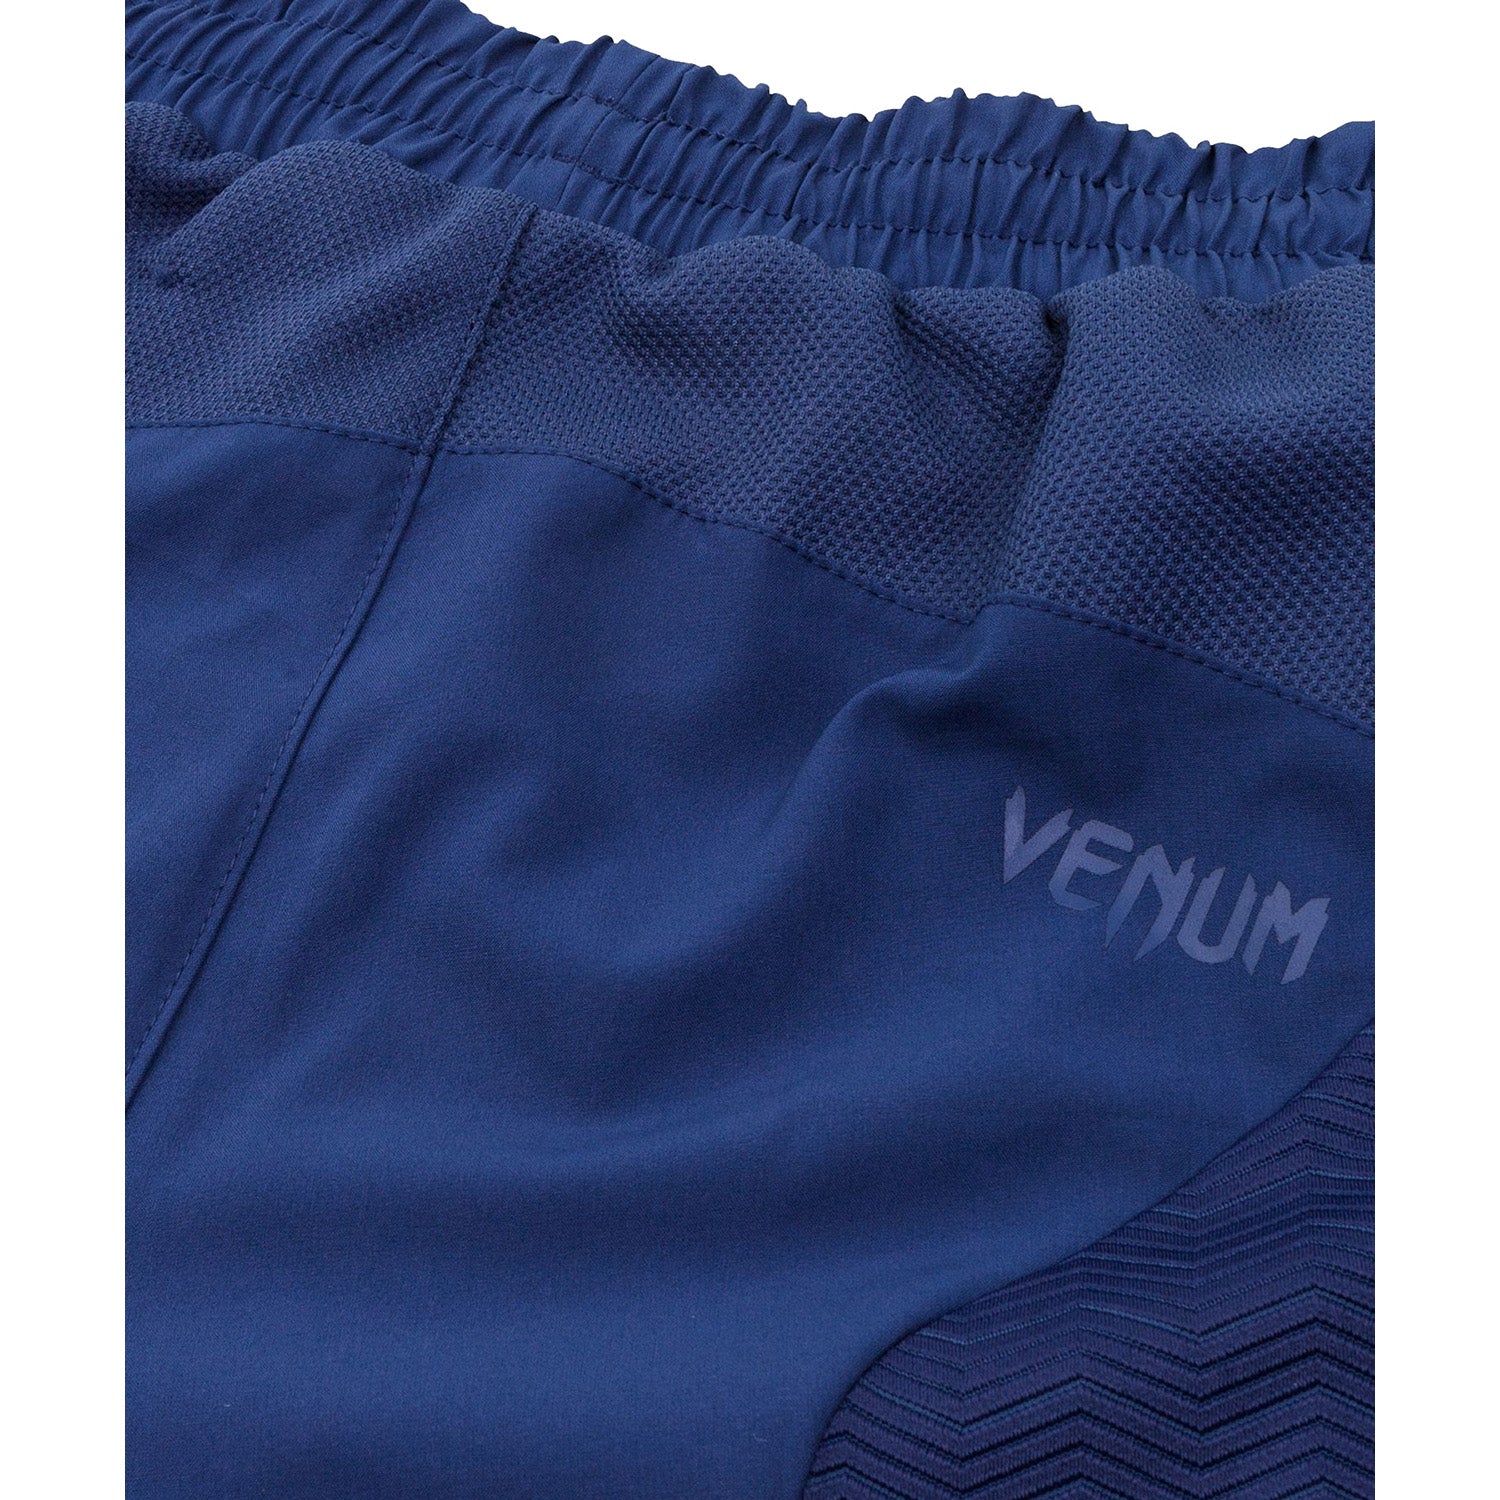 Venum G-Fit Training Shorts, Navy - Best Price online Prokicksports.com